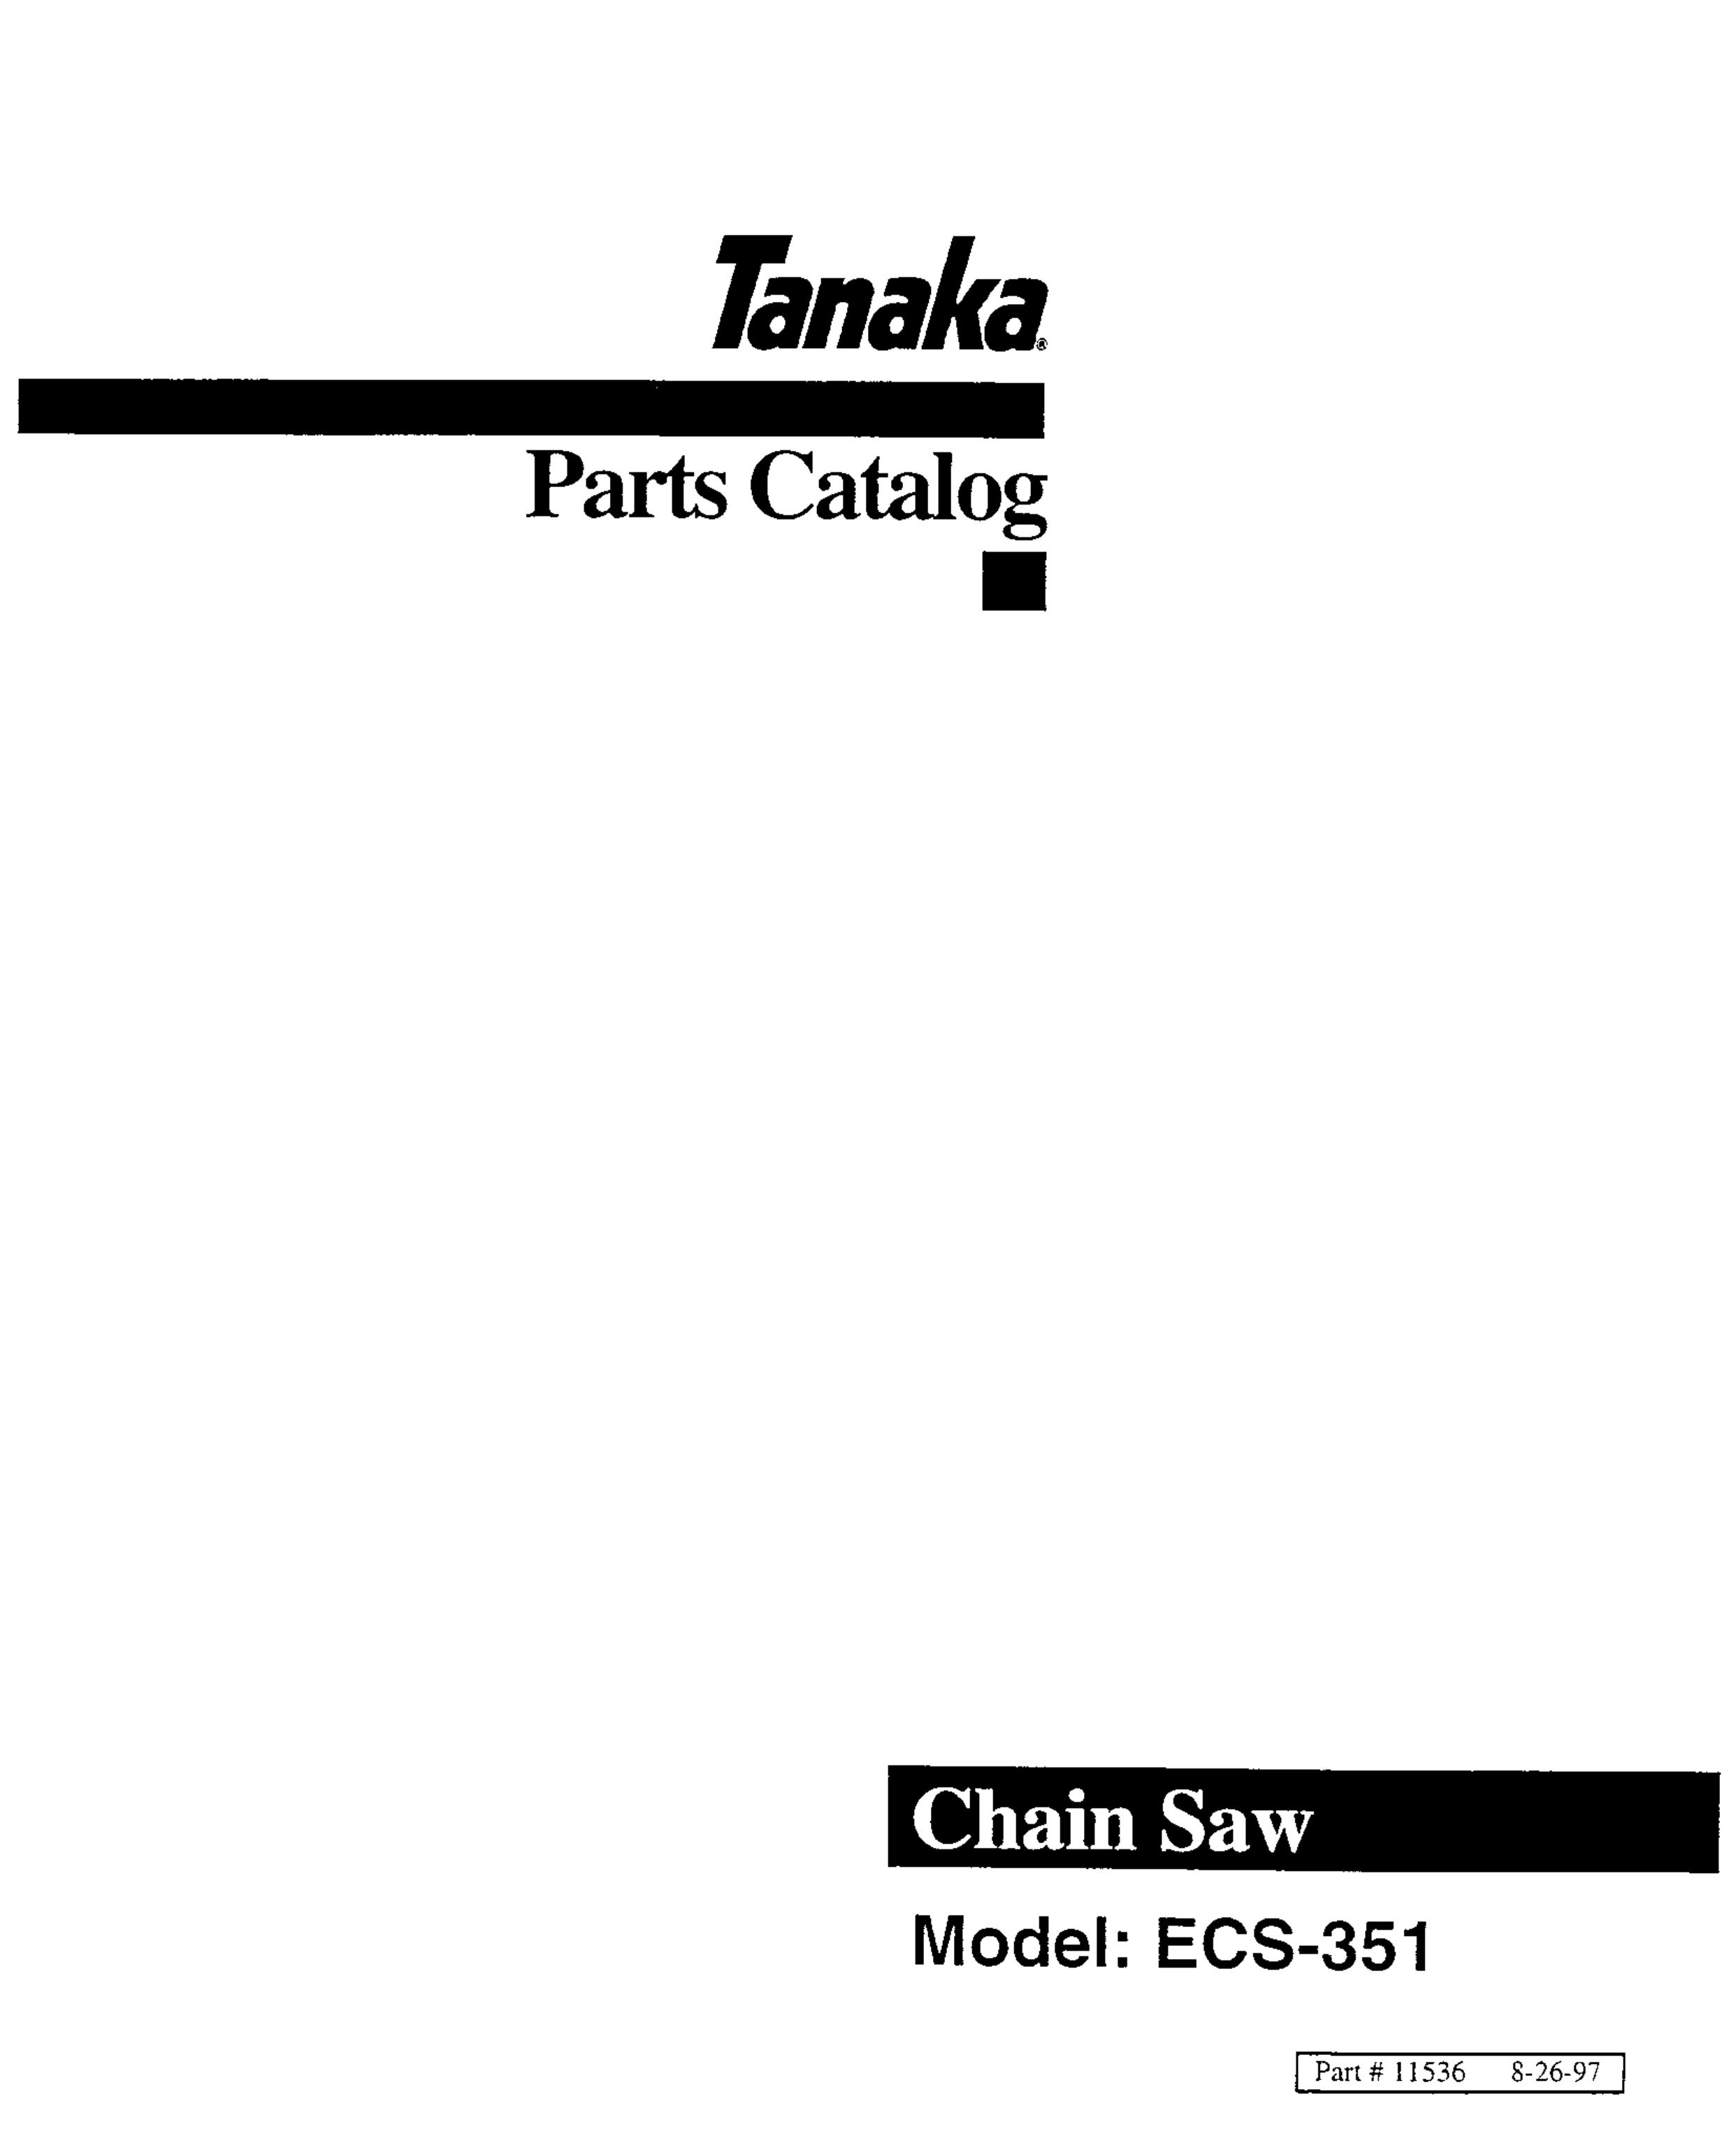 Tanaka ECS-351 Chainsaw User Manual